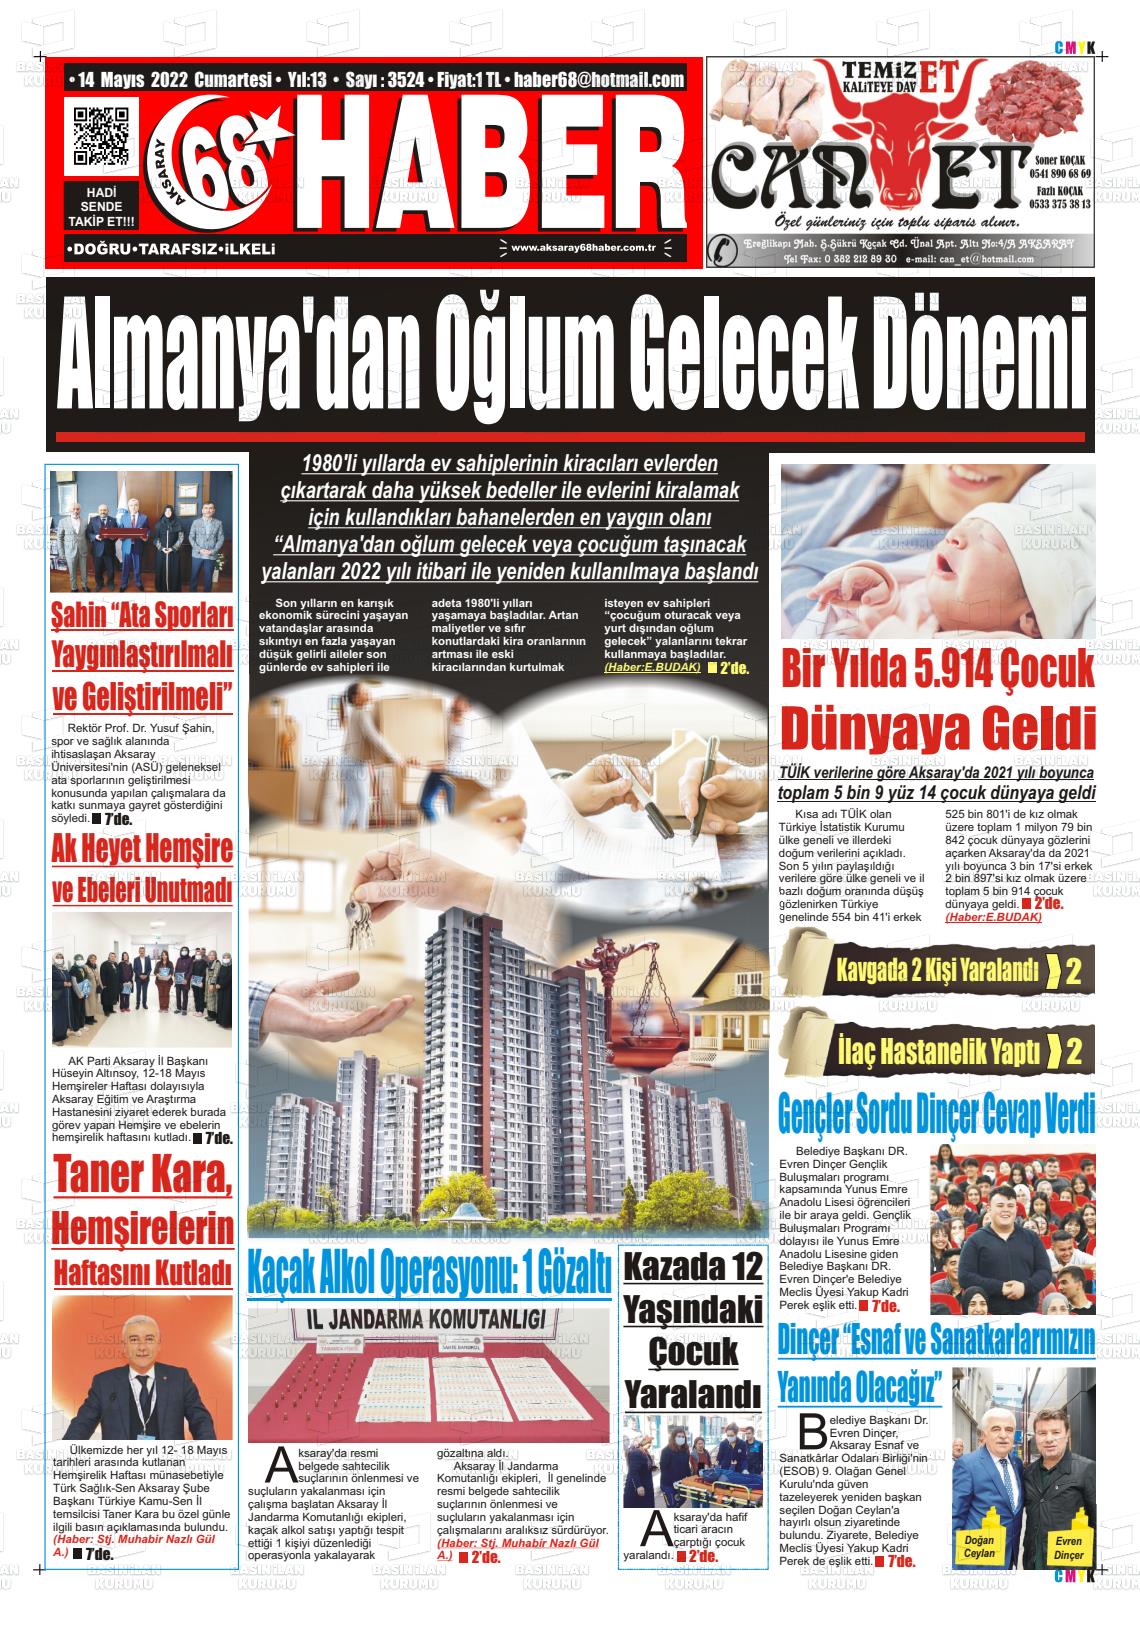 14 Mayıs 2022 Aksaray 68 Haber Gazete Manşeti